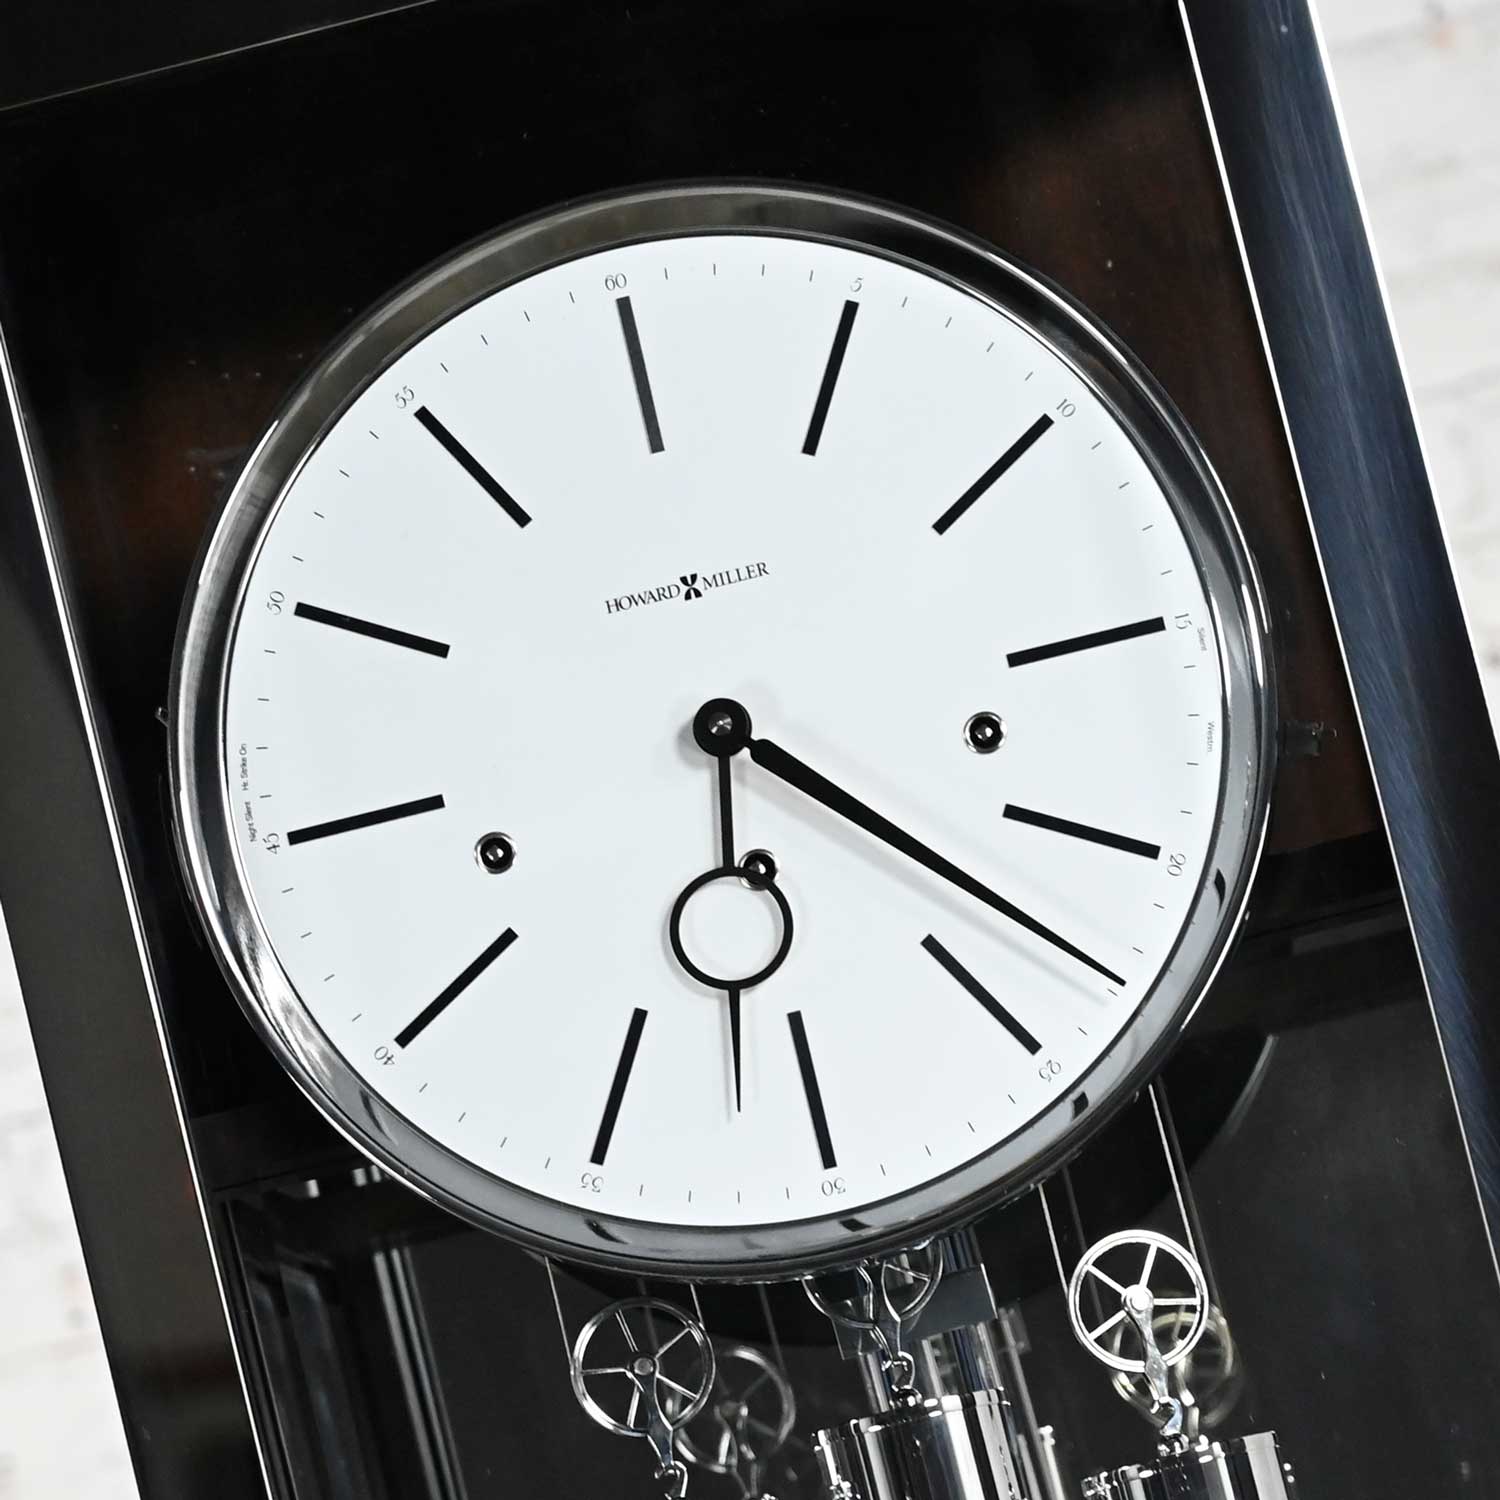 Howard Miller Quinten Model 611-216 Chrome & Espresso Floor Grandfather Clock Discontinued